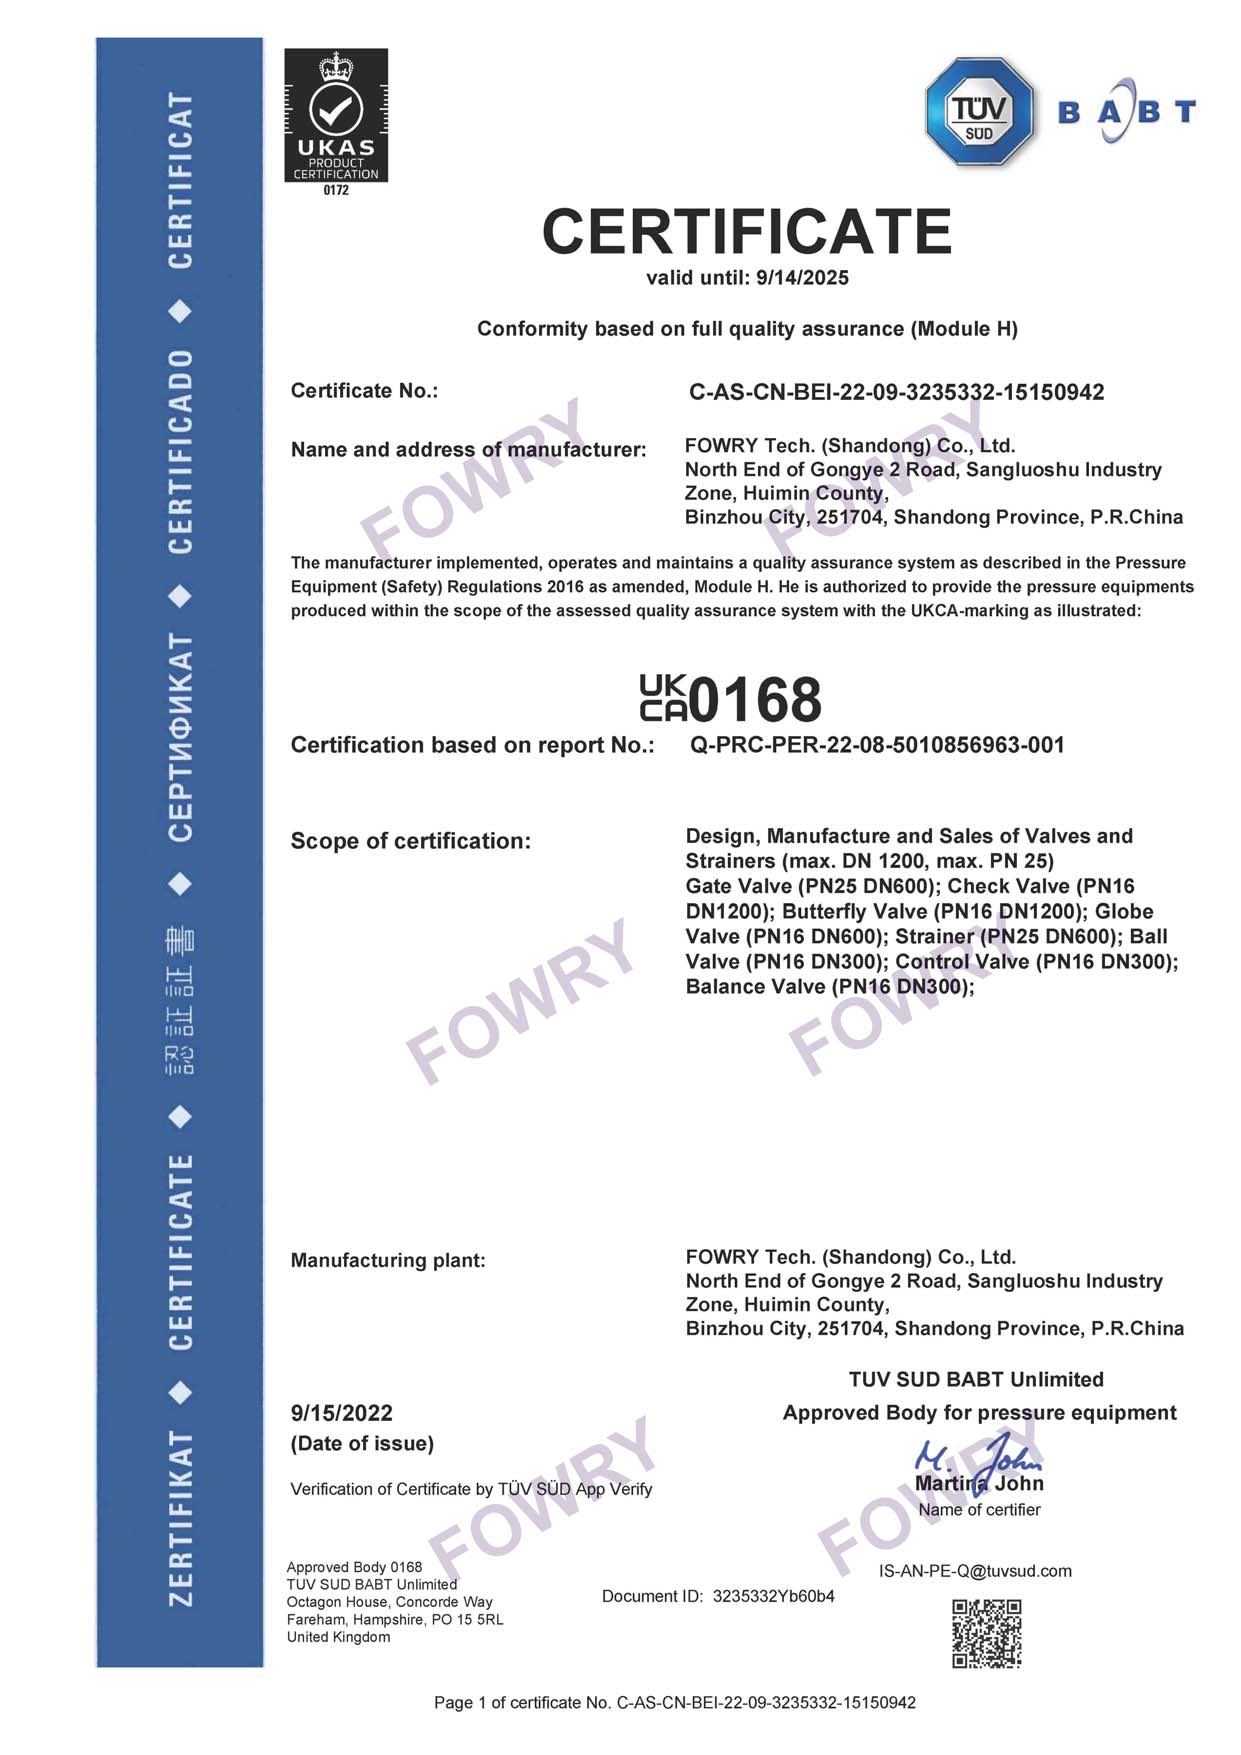 FOWRY UKCA Certificate